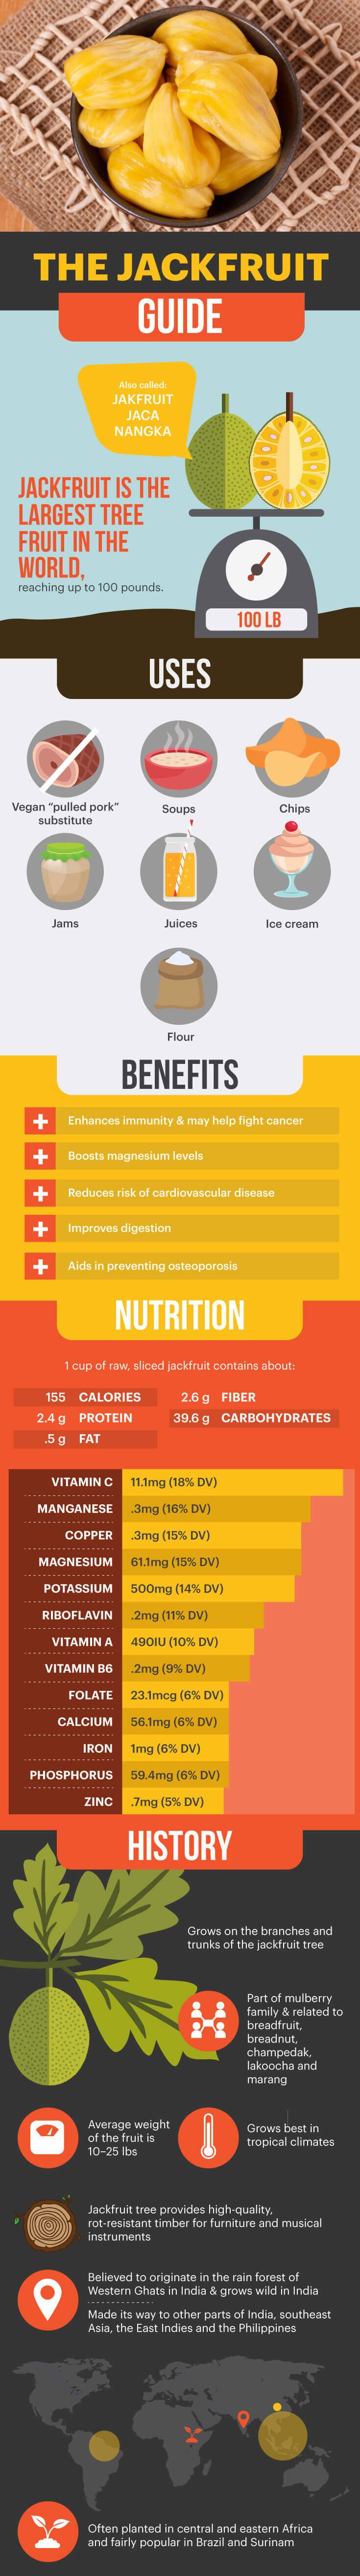 health benefits of jackfruit infographic guide